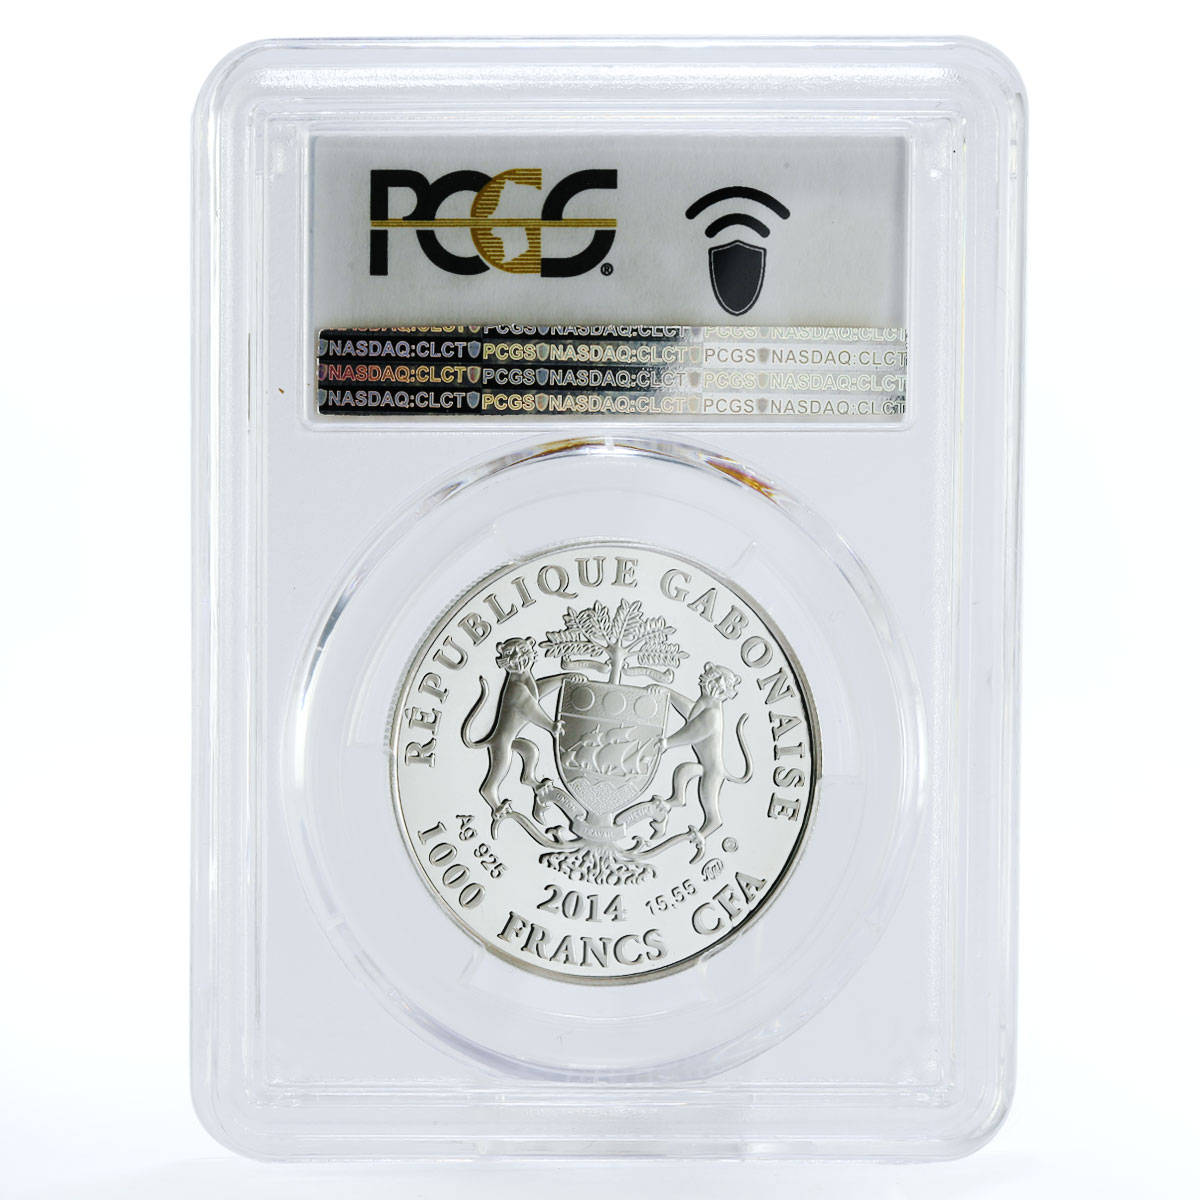 Gabon 1000 francs Zodiac Signs series Libra PR70 PCGS proof silver coin 2014